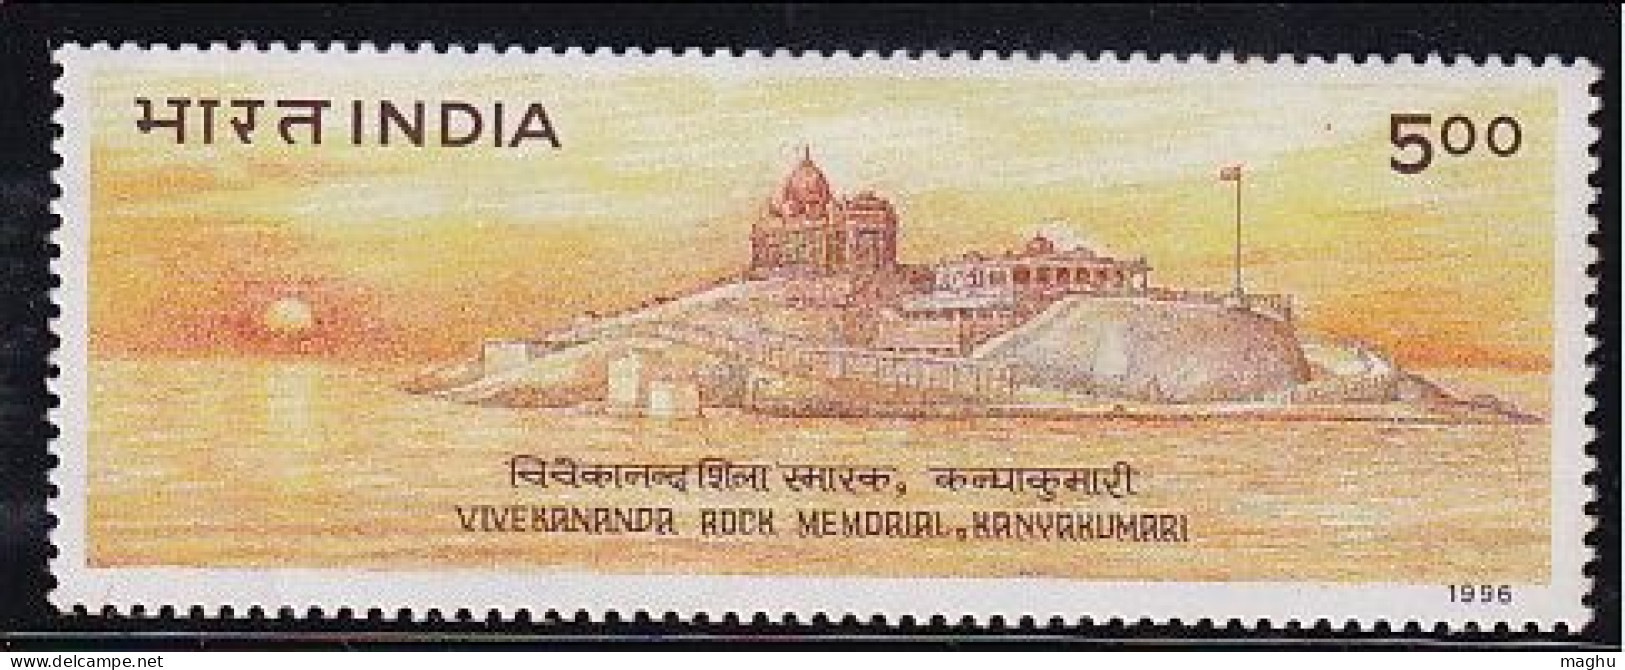 India MNH 1996, Vivekananda Rock Memorial, Kanyakumari, Flag, Sun, Astronomy, Cond.,stains - Neufs